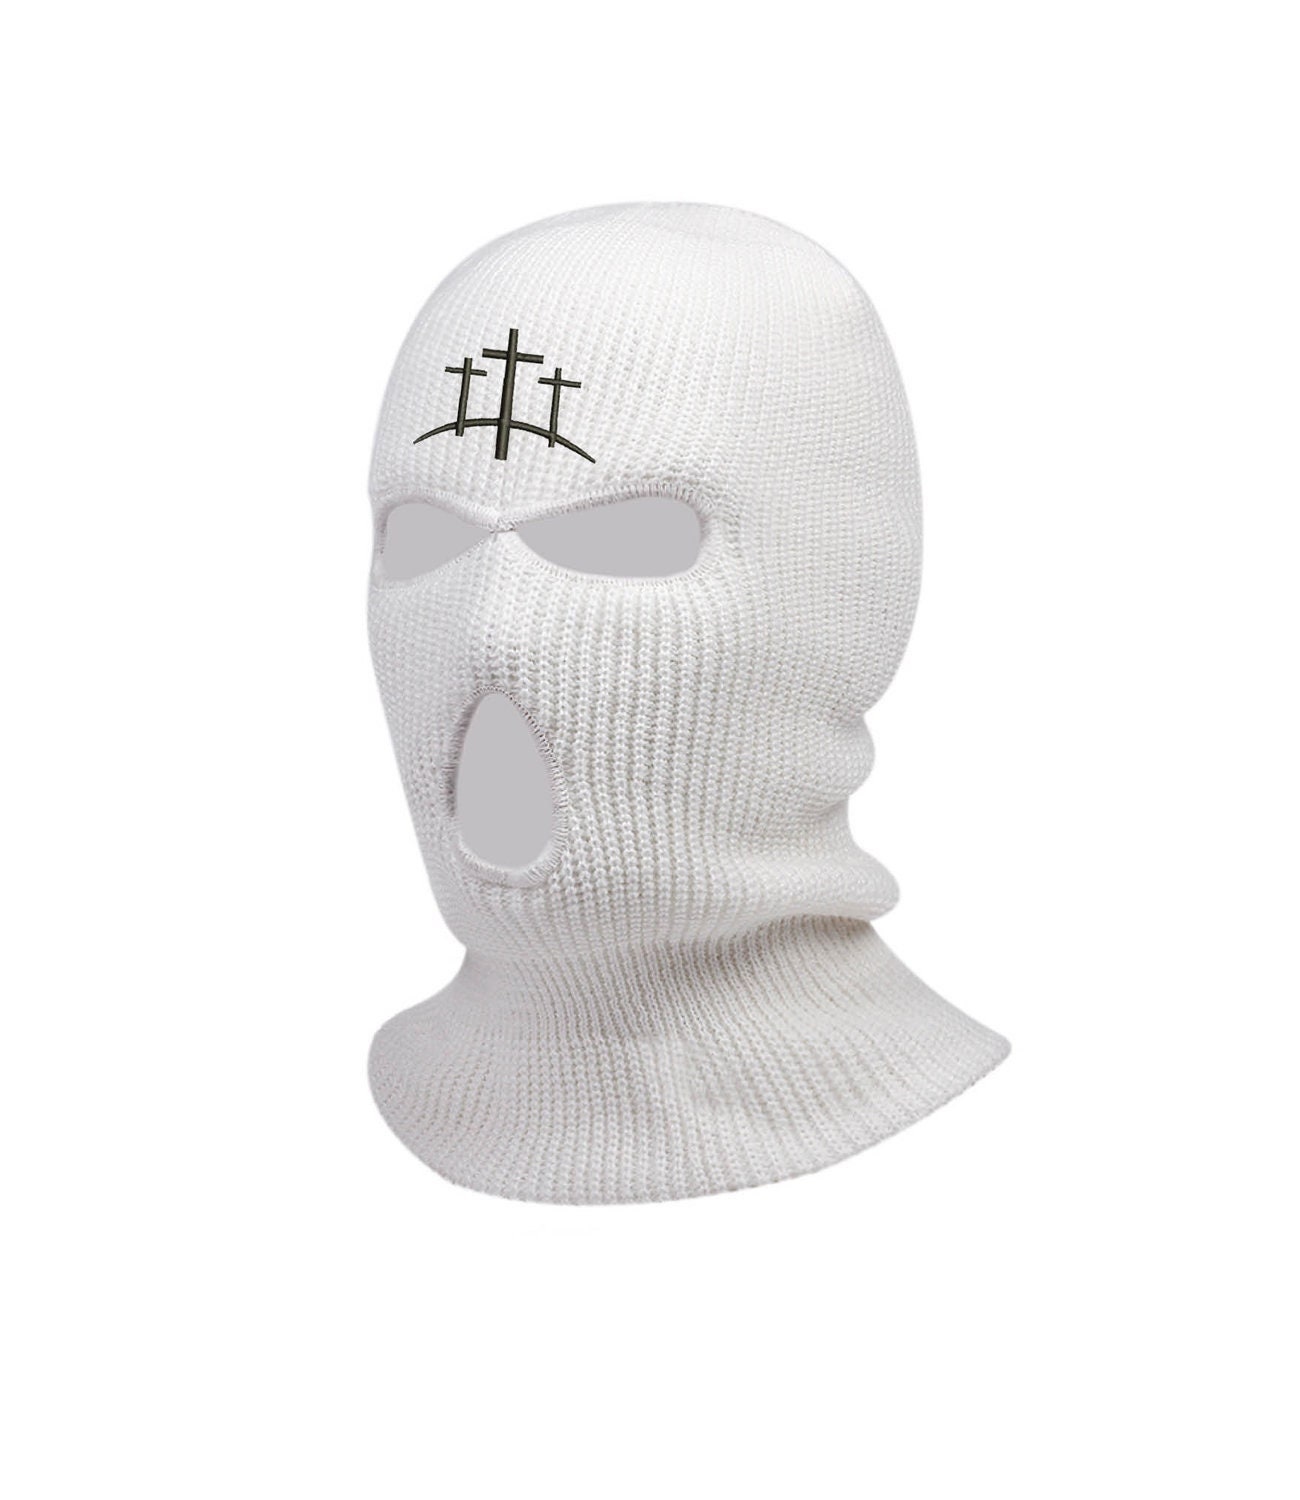 Personalized Ski Mask Custom Text Embroidery Three Hole Ski -  UK